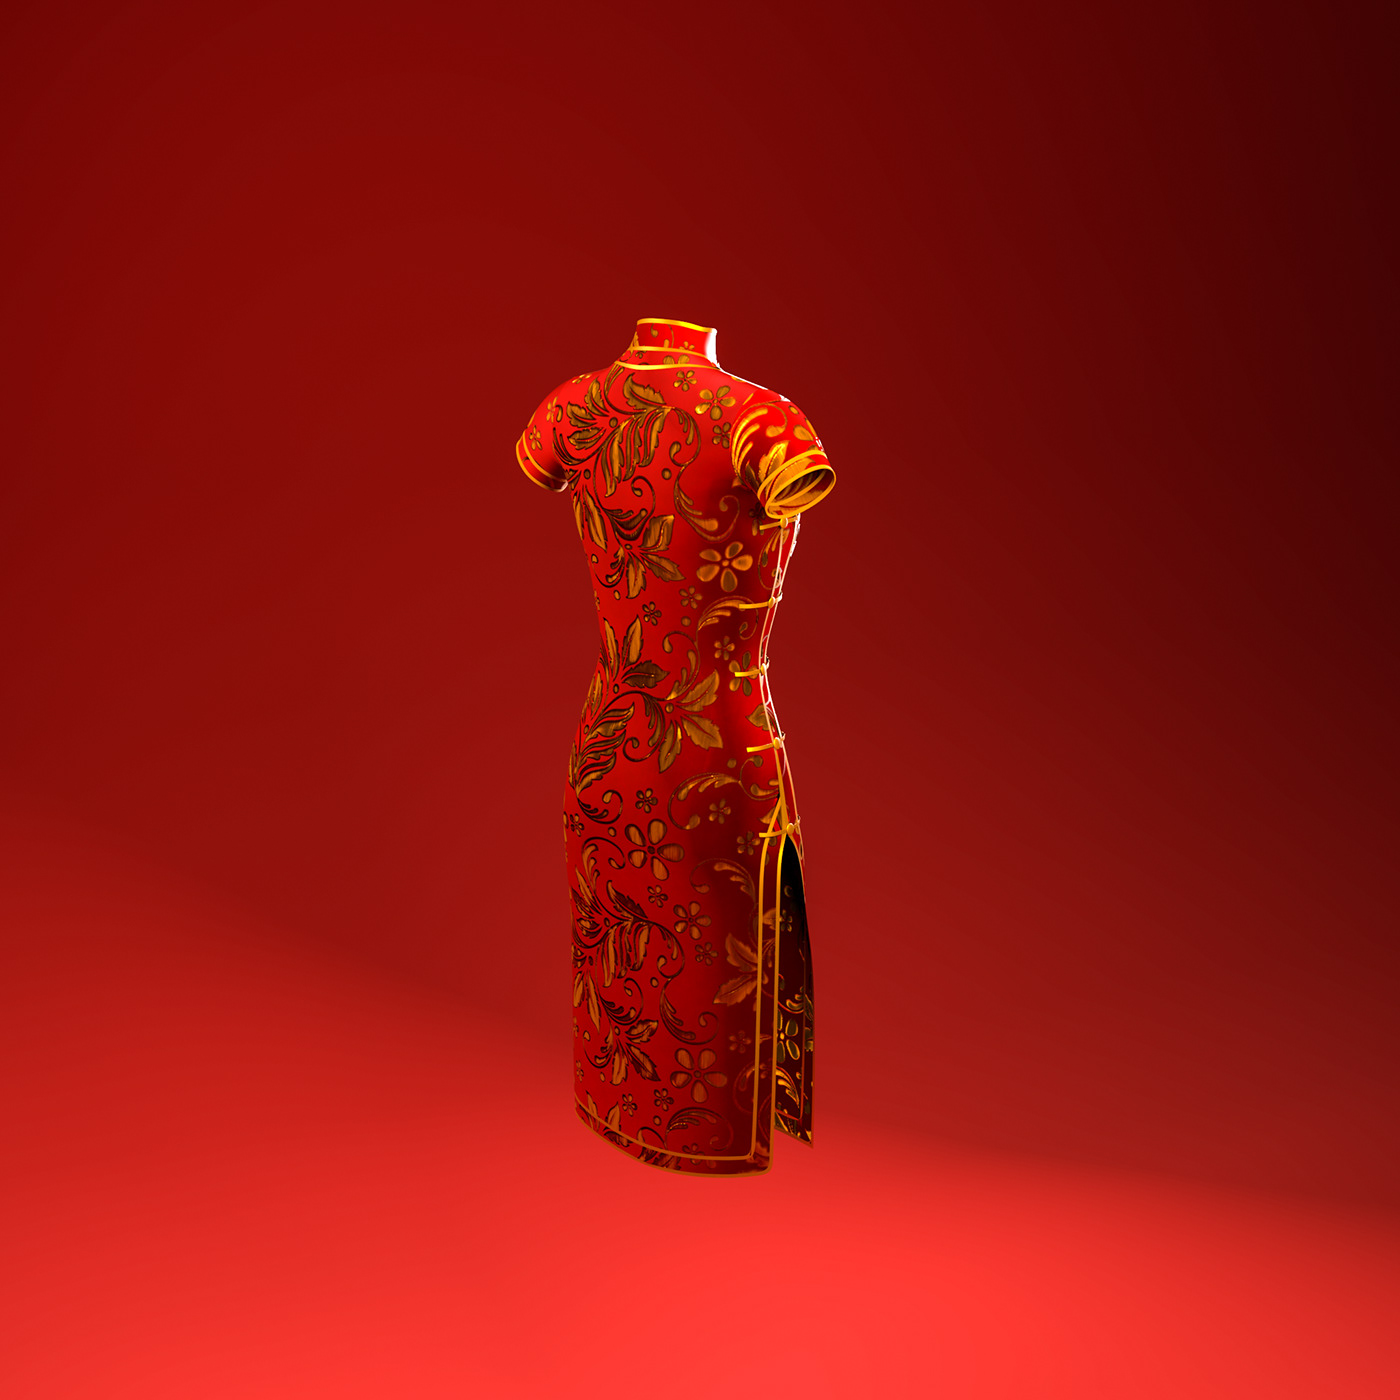 3D Fashion 3D qipao 3d art Render 3D Clothing fashion design marvelous designer 3d fashion Digital Art 